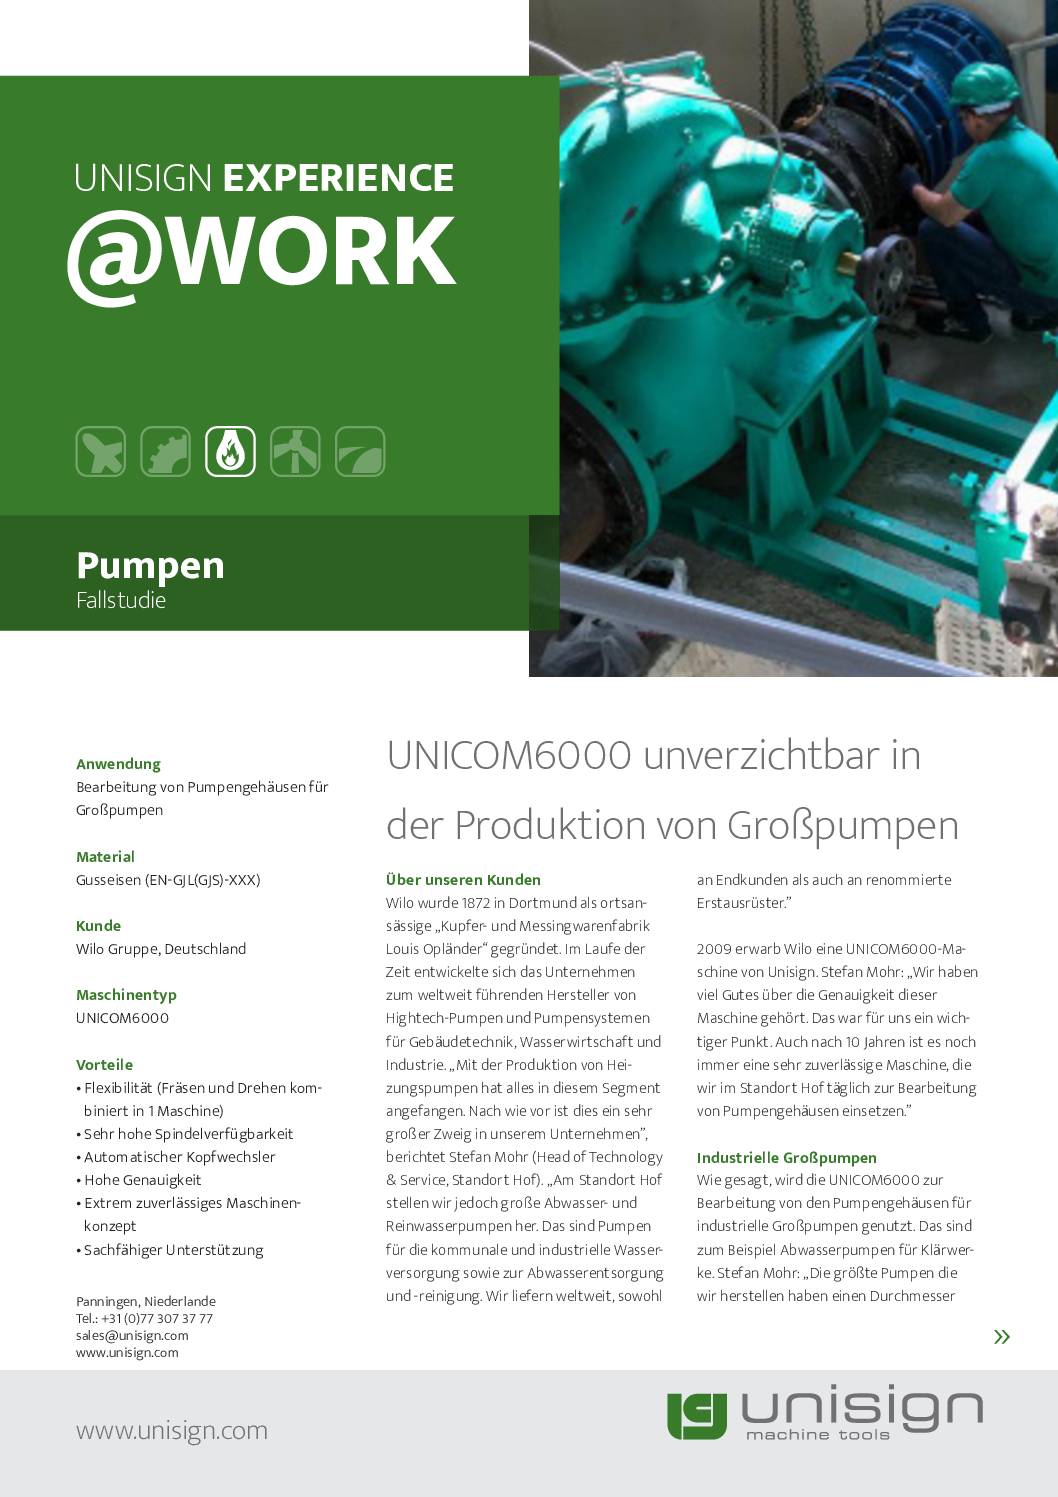 UNISIGN_Case-studies_Unicom6000-WiloGruppe_DE